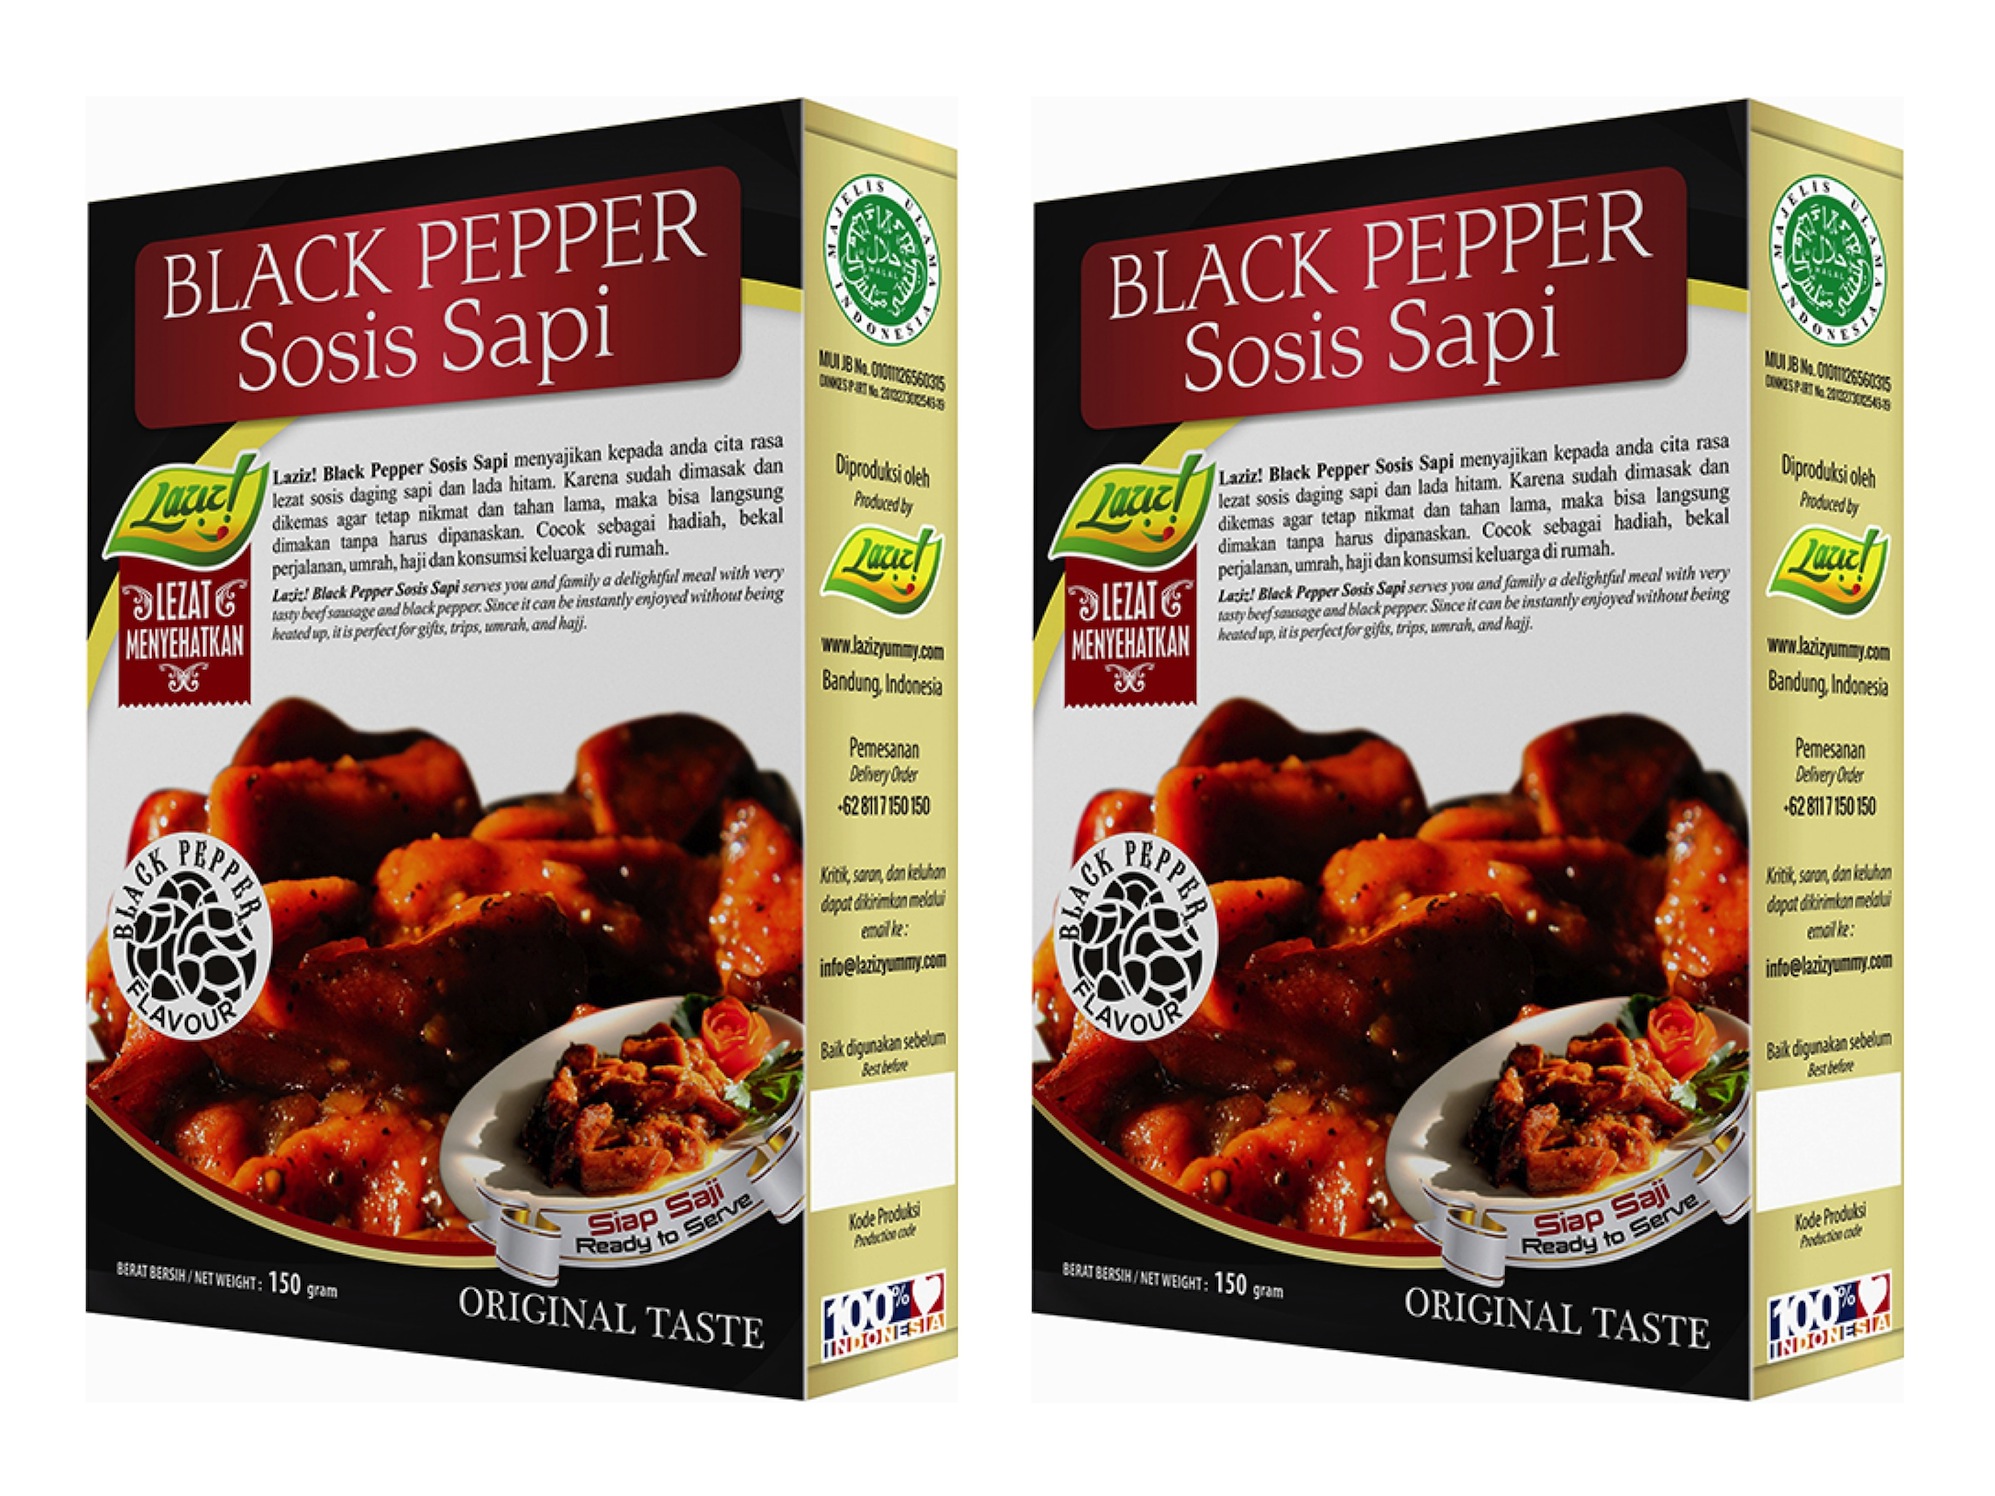 2 Black Pepper Sosis Sapi